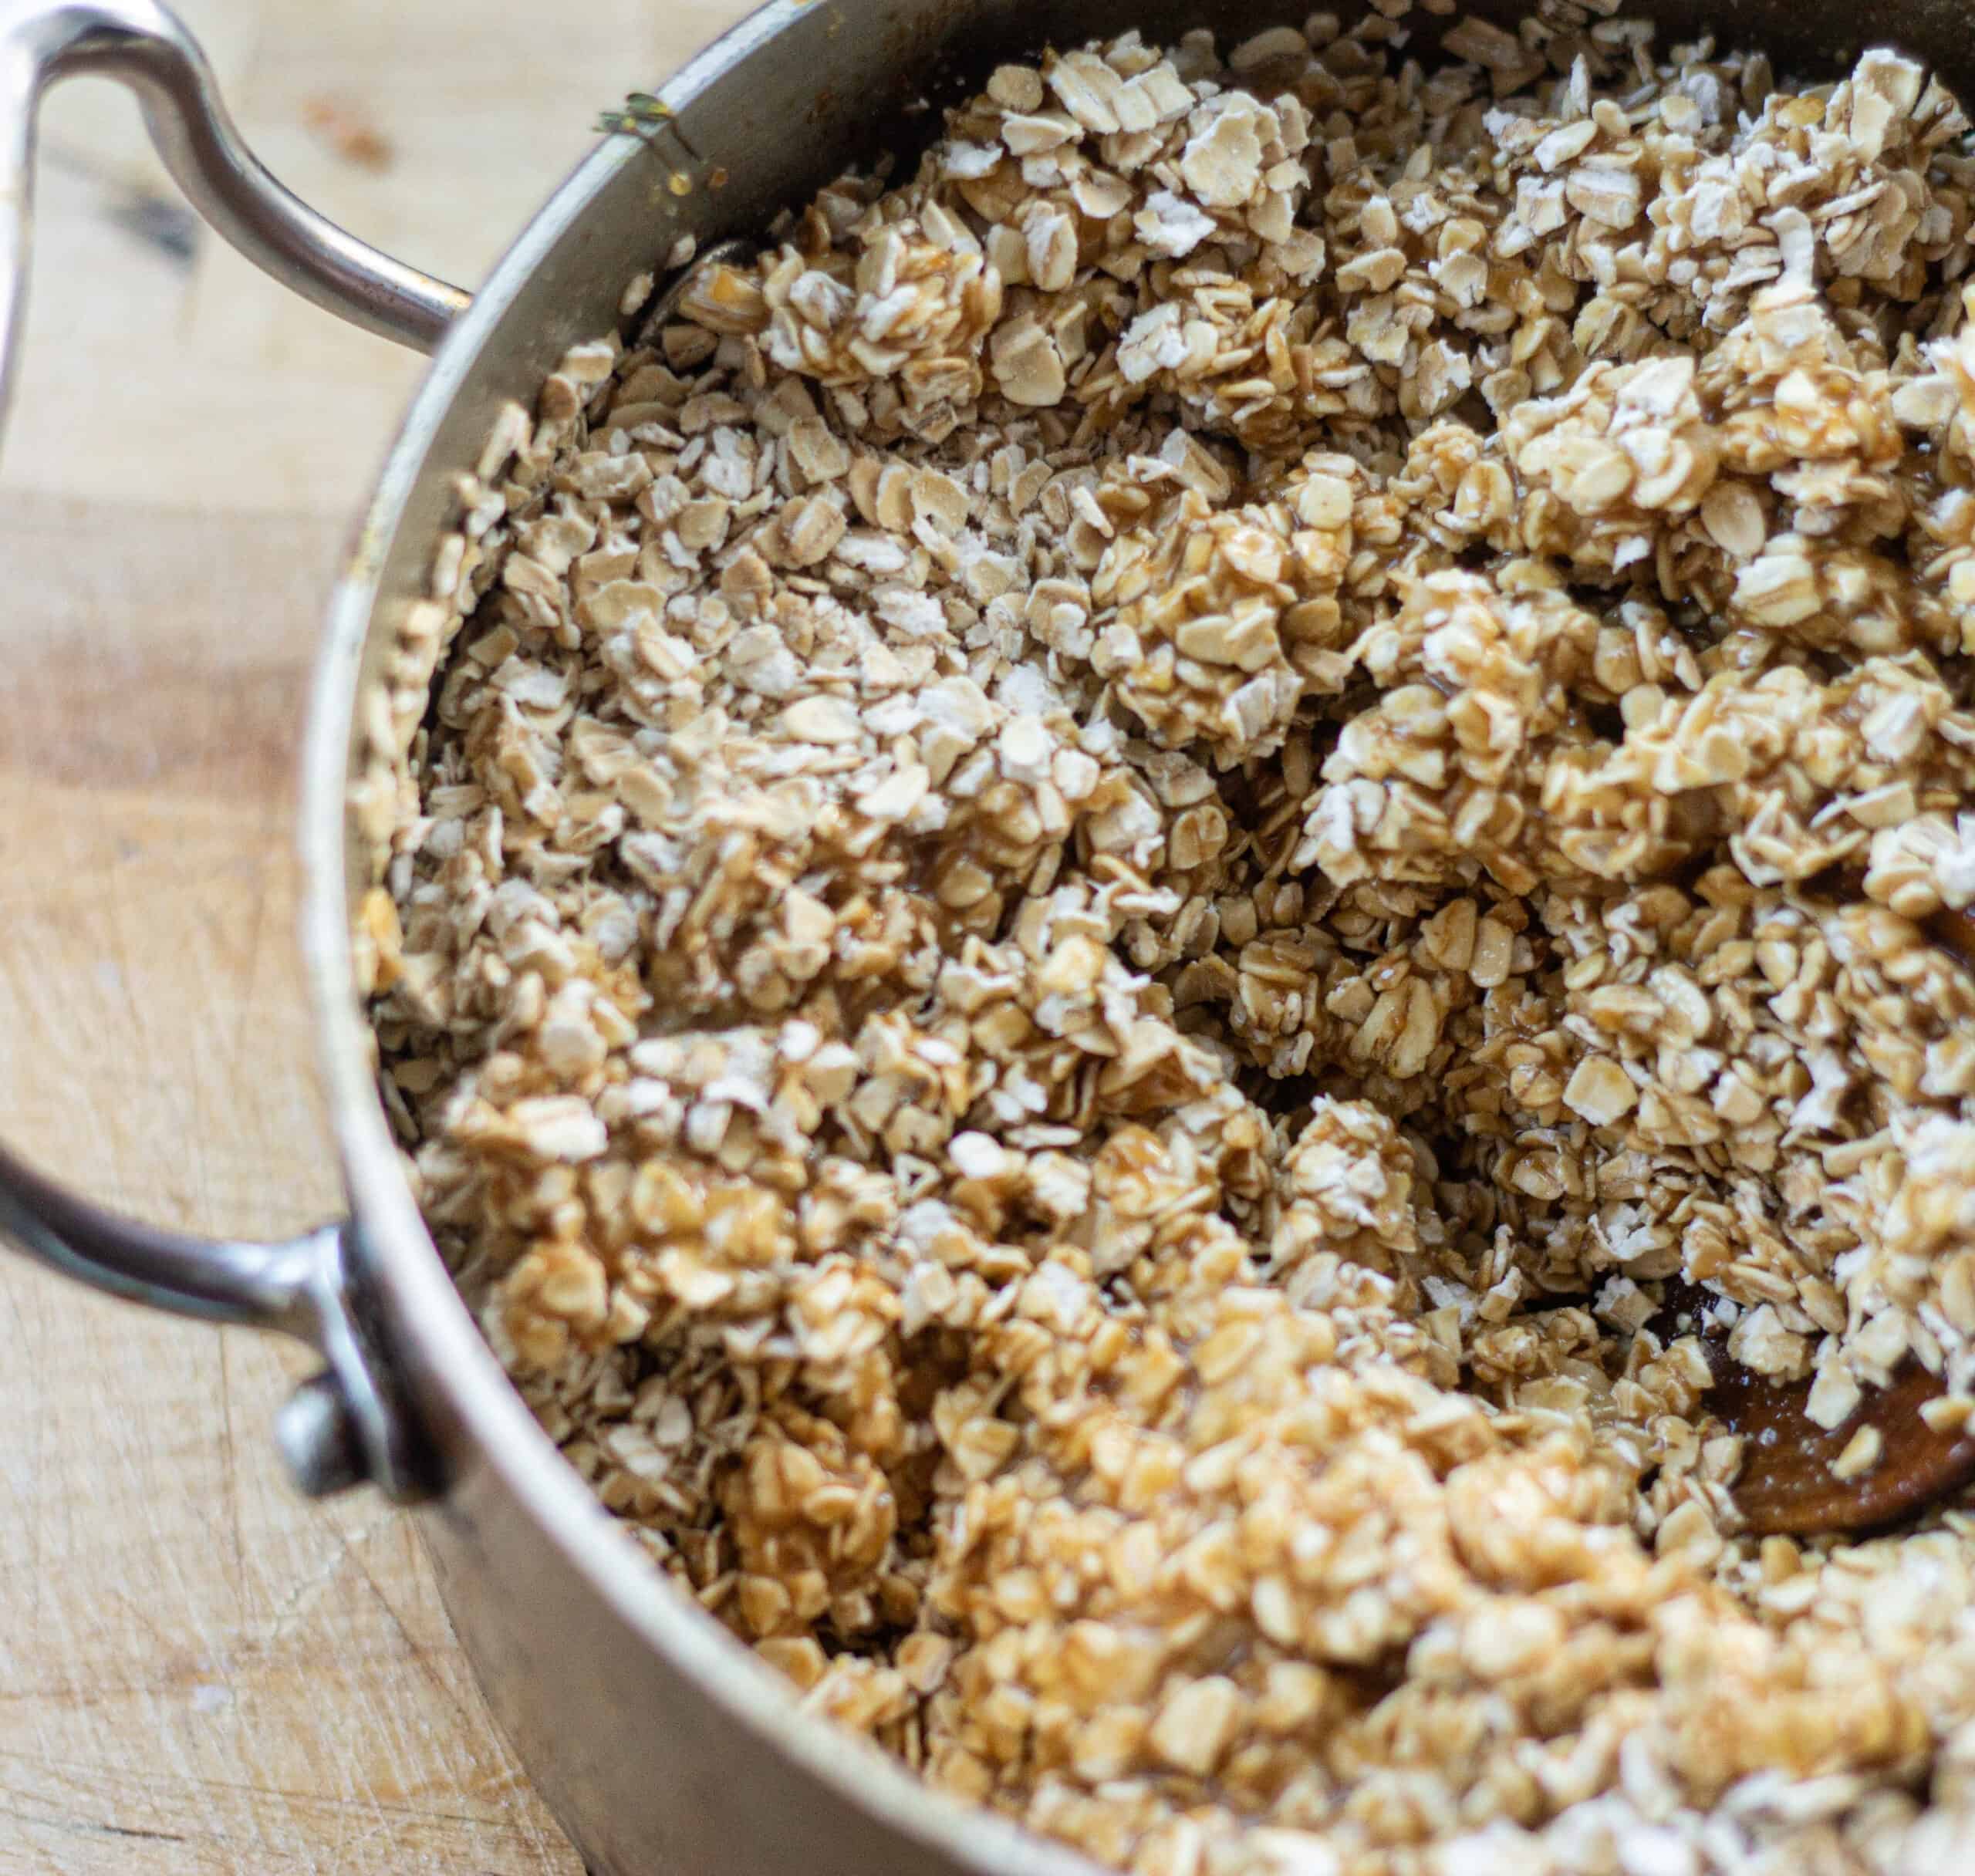 Stir oats into flapjack mixture